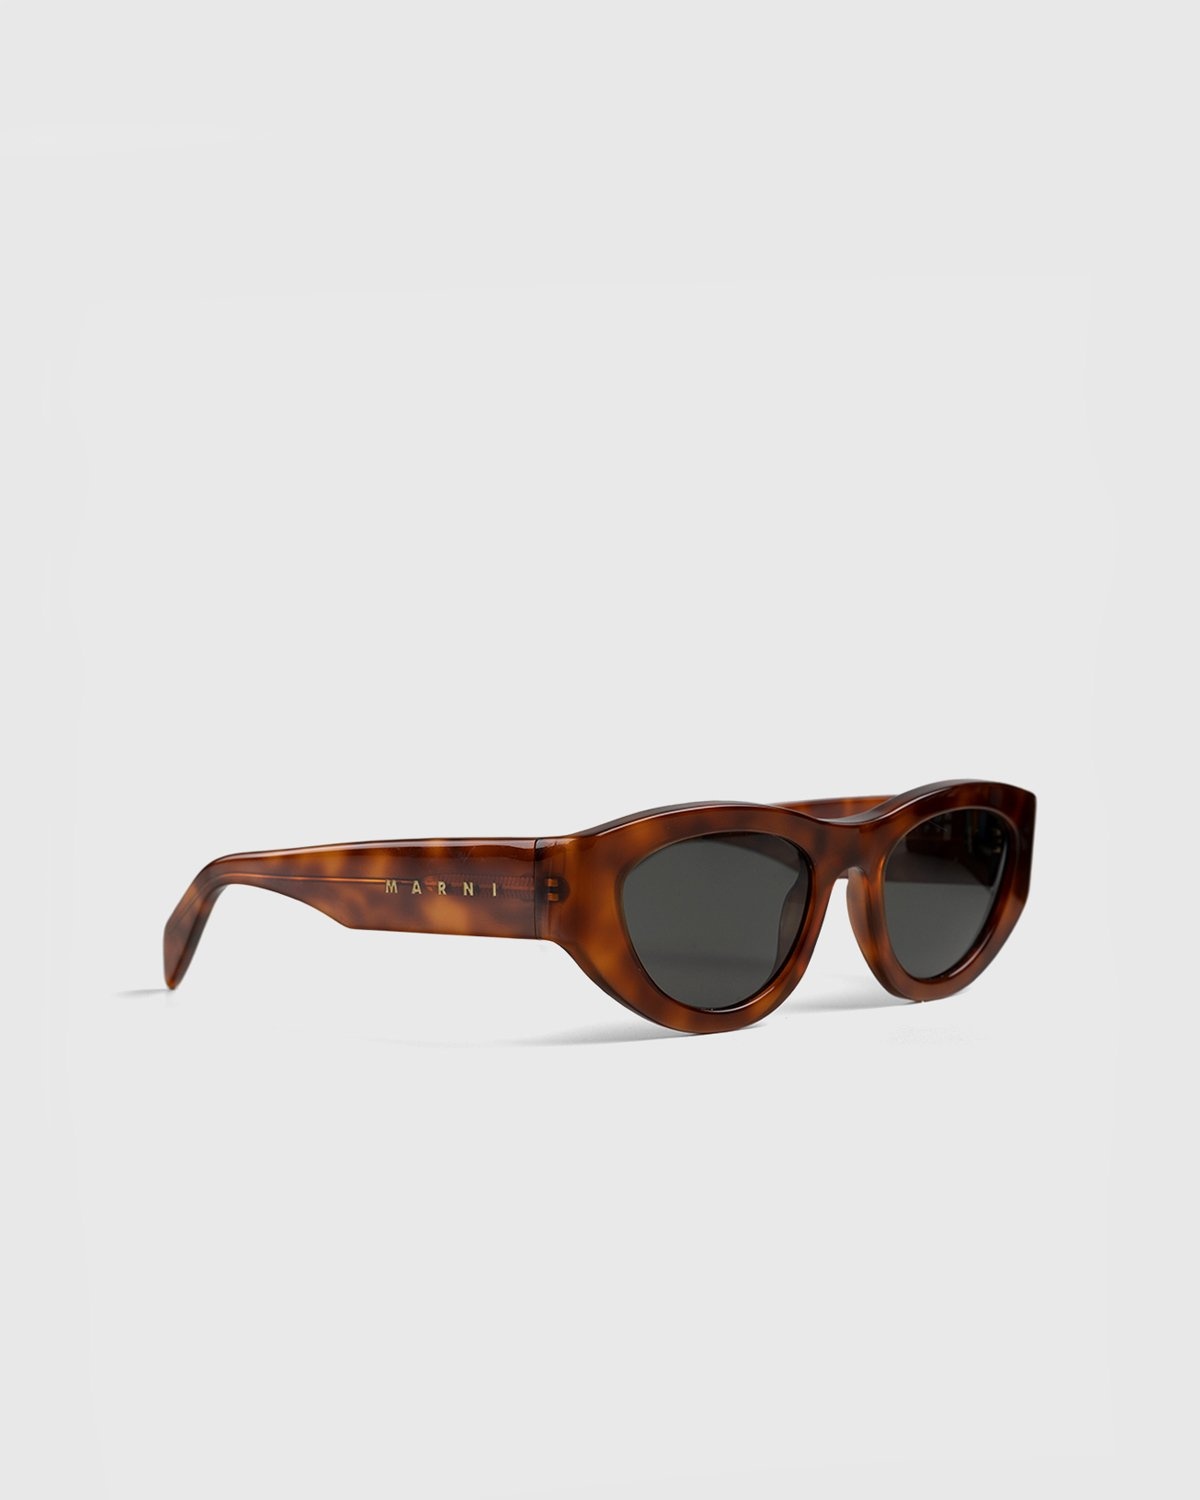 Marni – Rainbow Mountains Sunglasses Blonde Havana - Sunglasses - Brown - Image 2